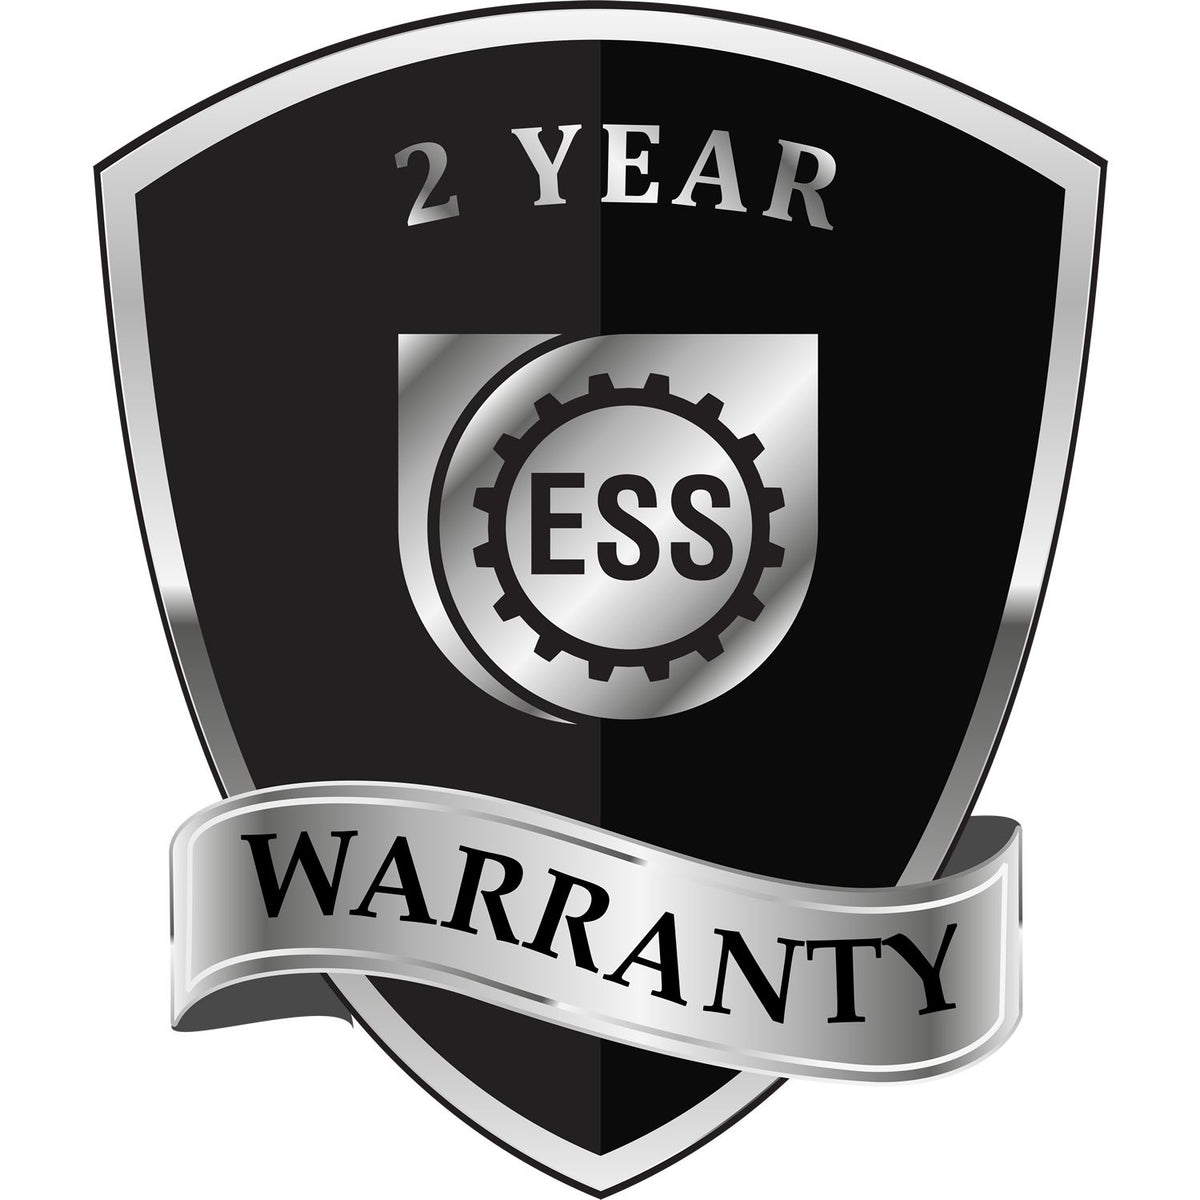 A black and silver badge or emblem showing warranty information for the Handheld Arkansas Professional Geologist Embosser